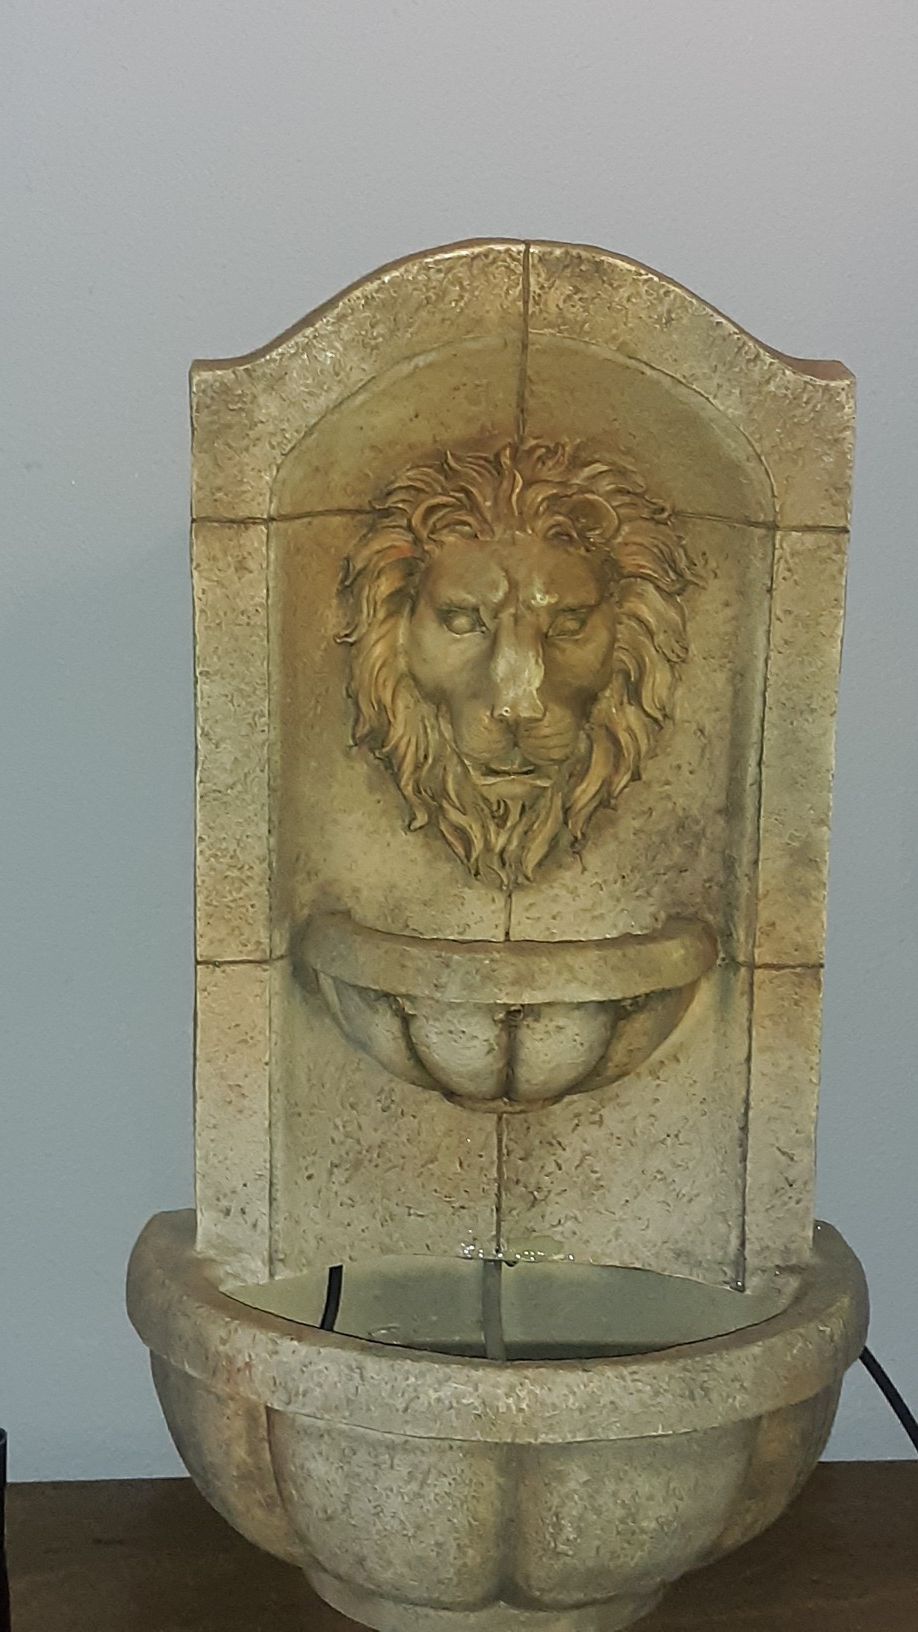 Water fountain of a lion. O.B.O